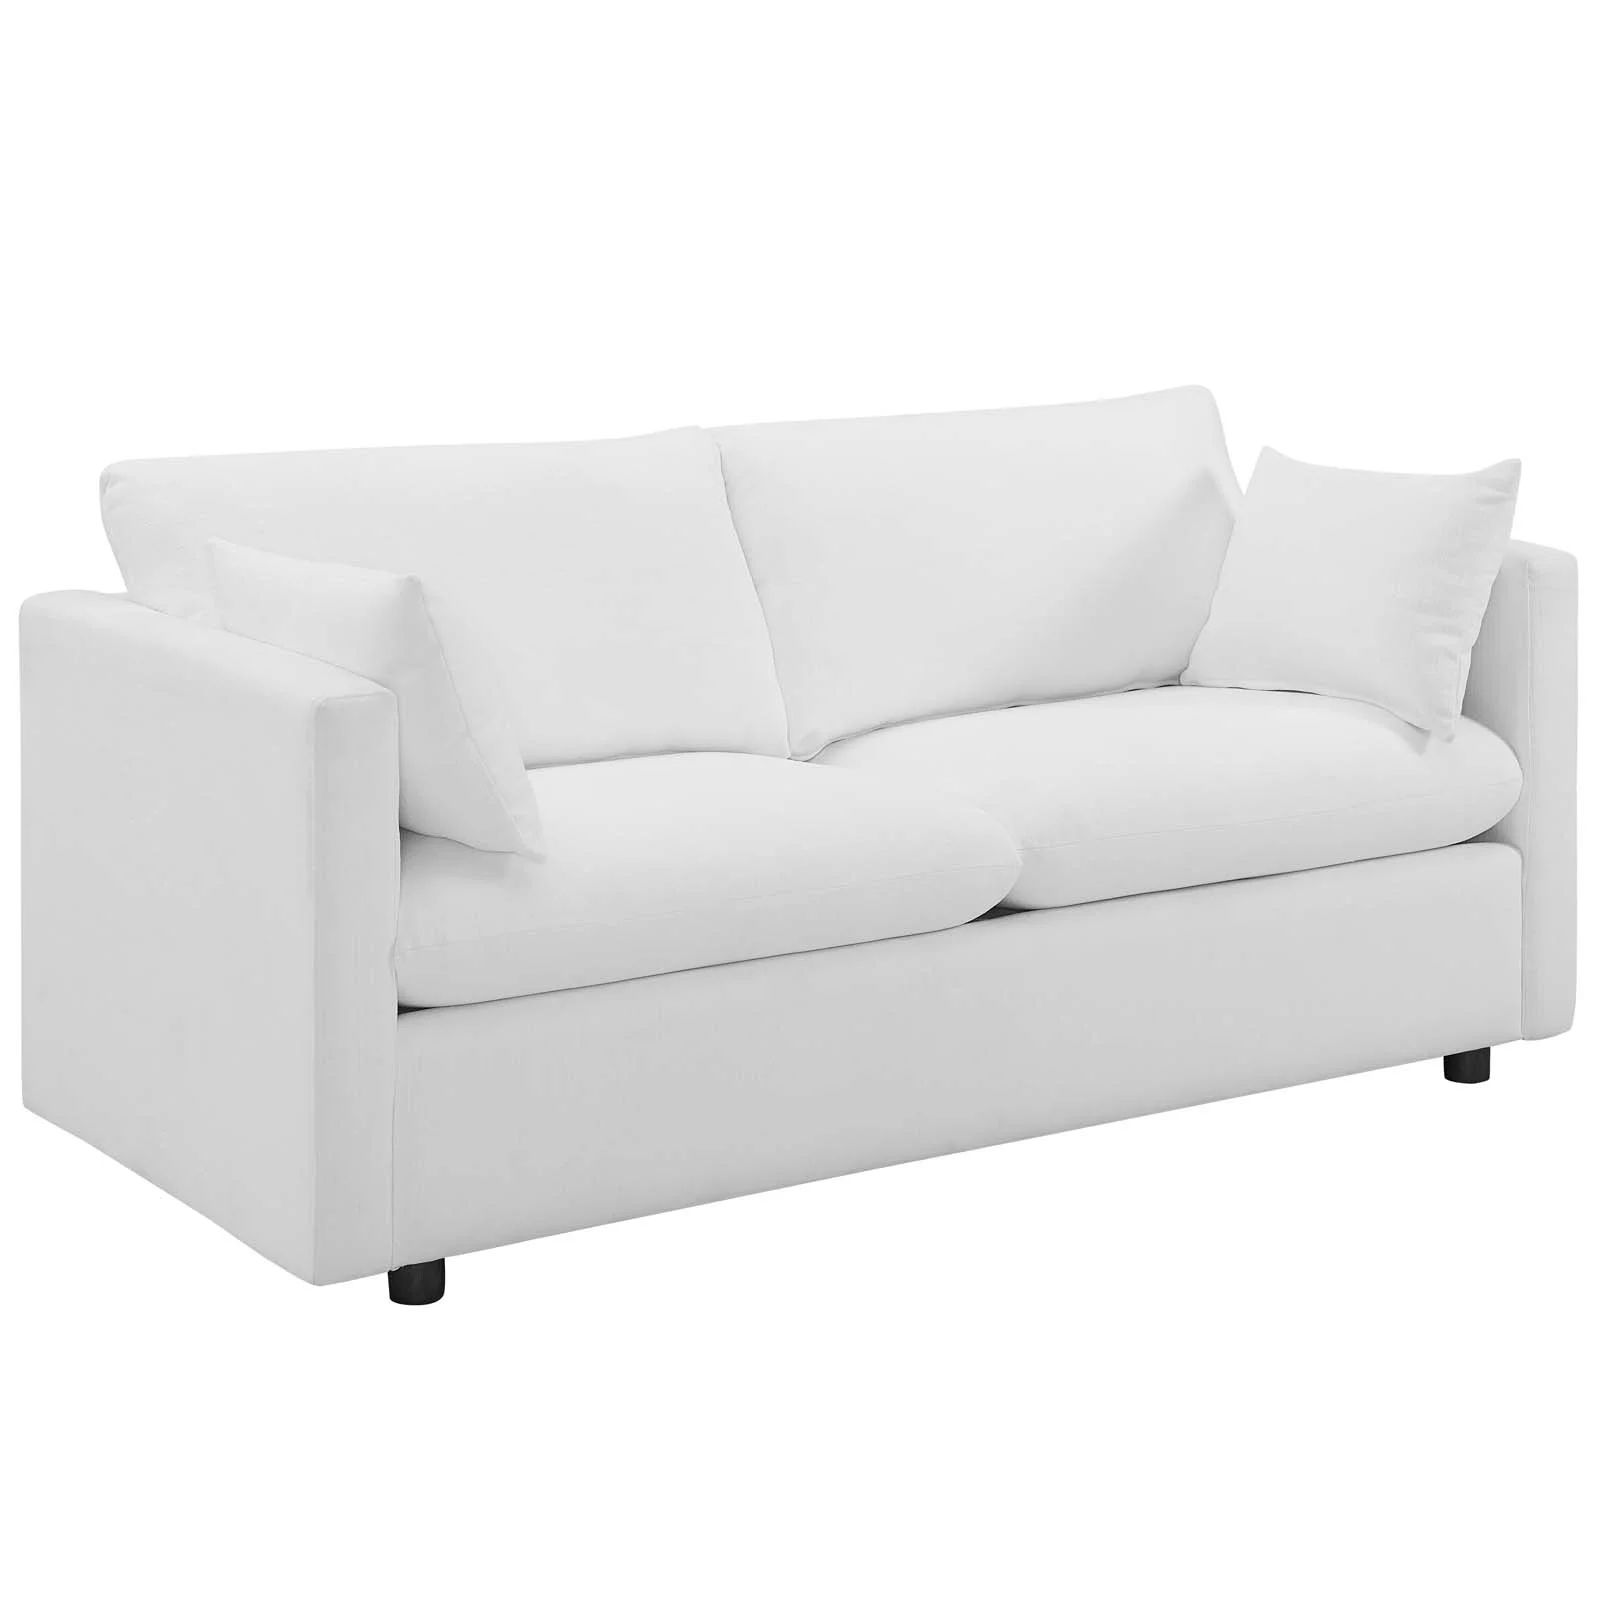 Modern Contemporary Urban Design Living Room Lounge Club Lobby Sofa, Fabric, White | Walmart (US)